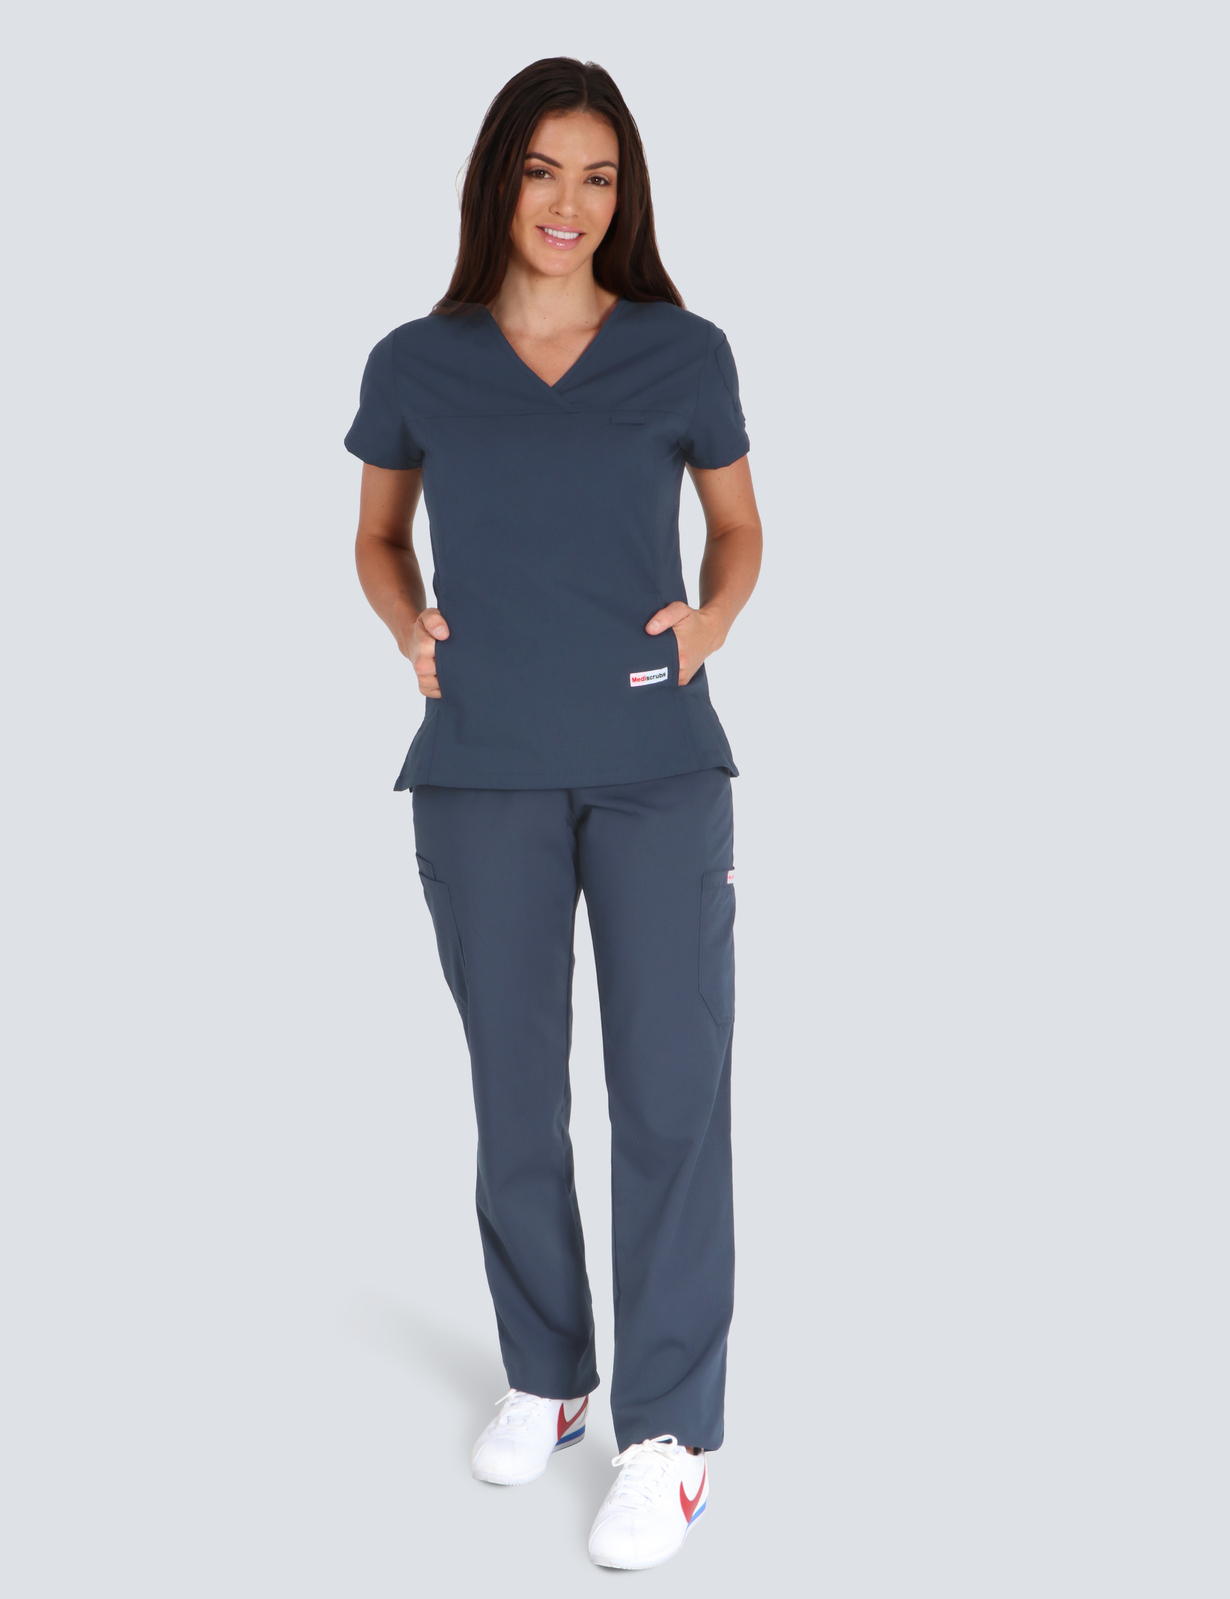 St Vincent's Hospital Cardiac Physiologist Uniform Set Bundle (Women's Fit Solid and Pants in Navy incl Logo) 